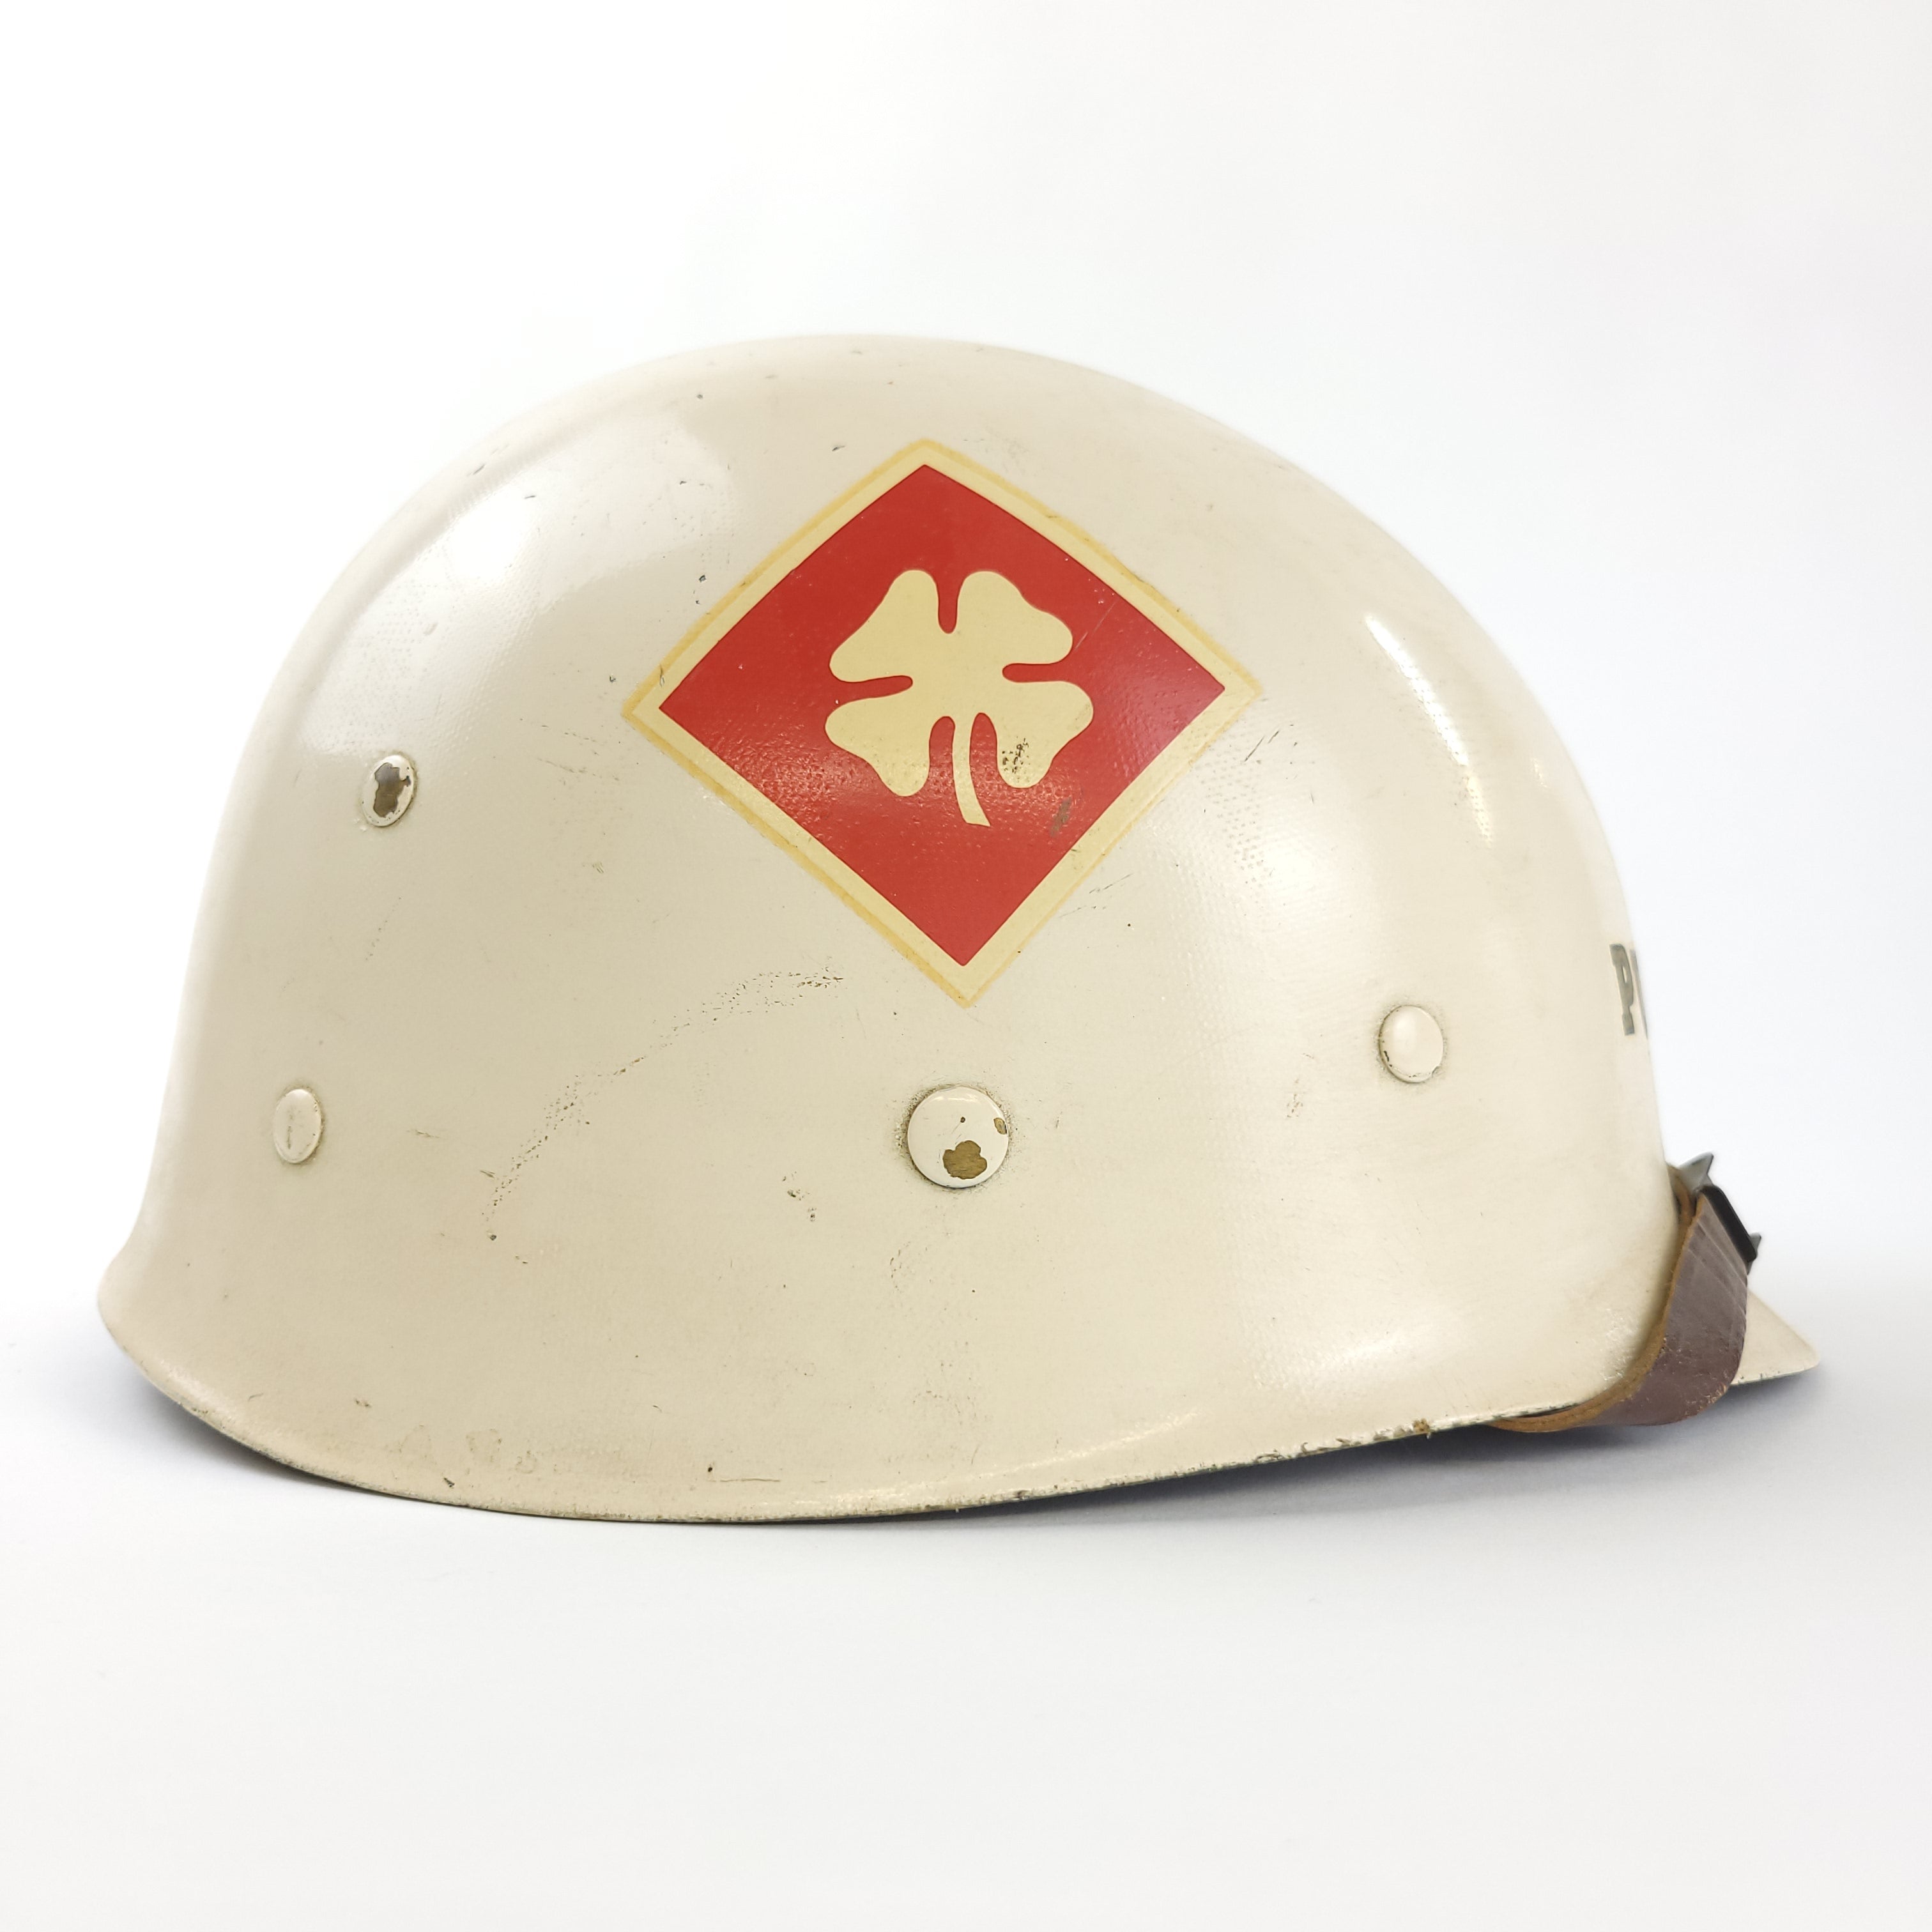 M1 Helmet Liner - Westinghouse - 4th Army 2nd Lt. Named - Complete - Original